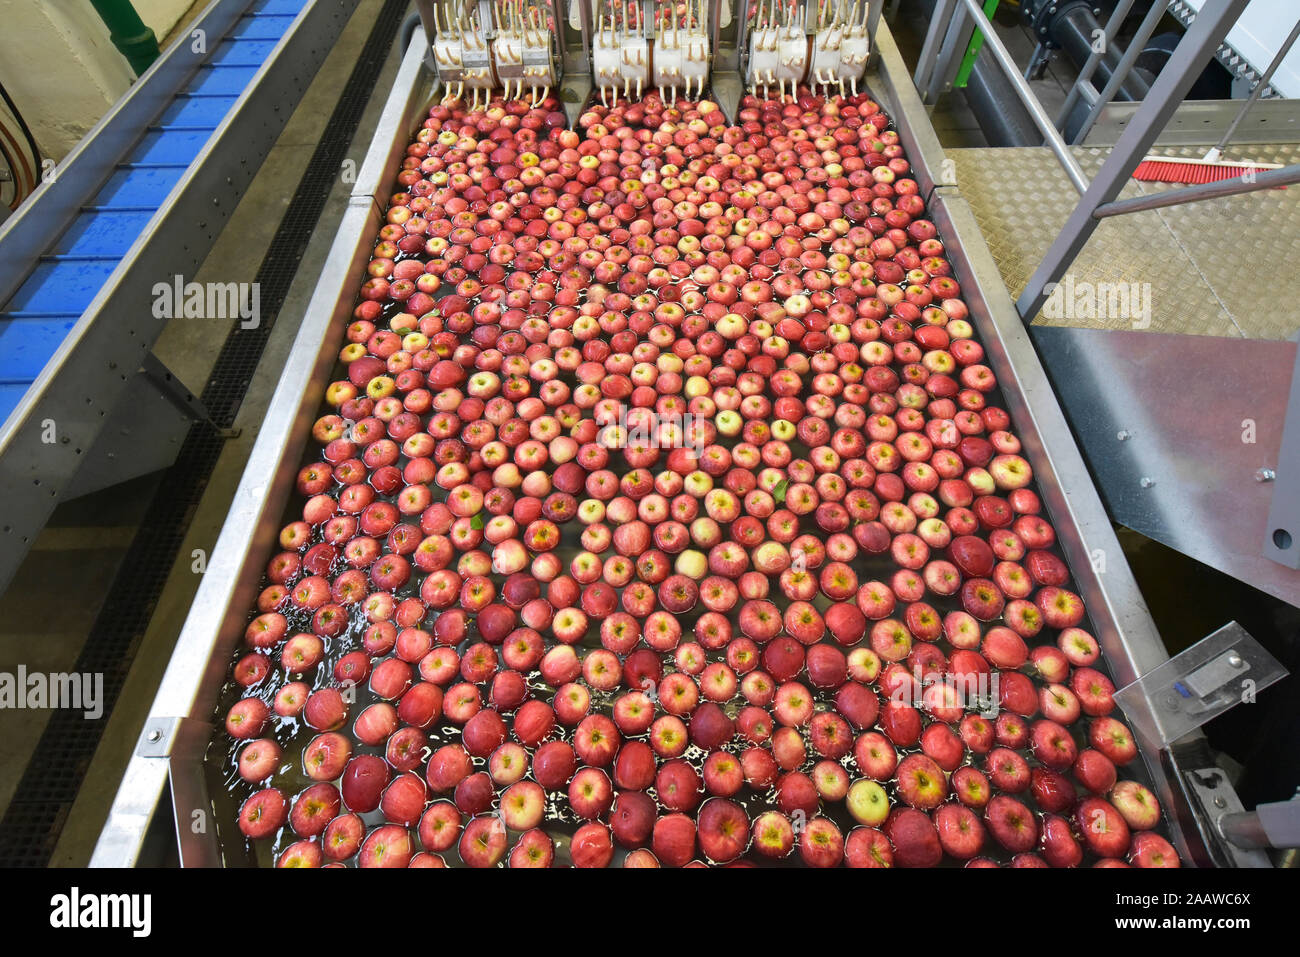 Conveyor belt with apples in water Stock Photo